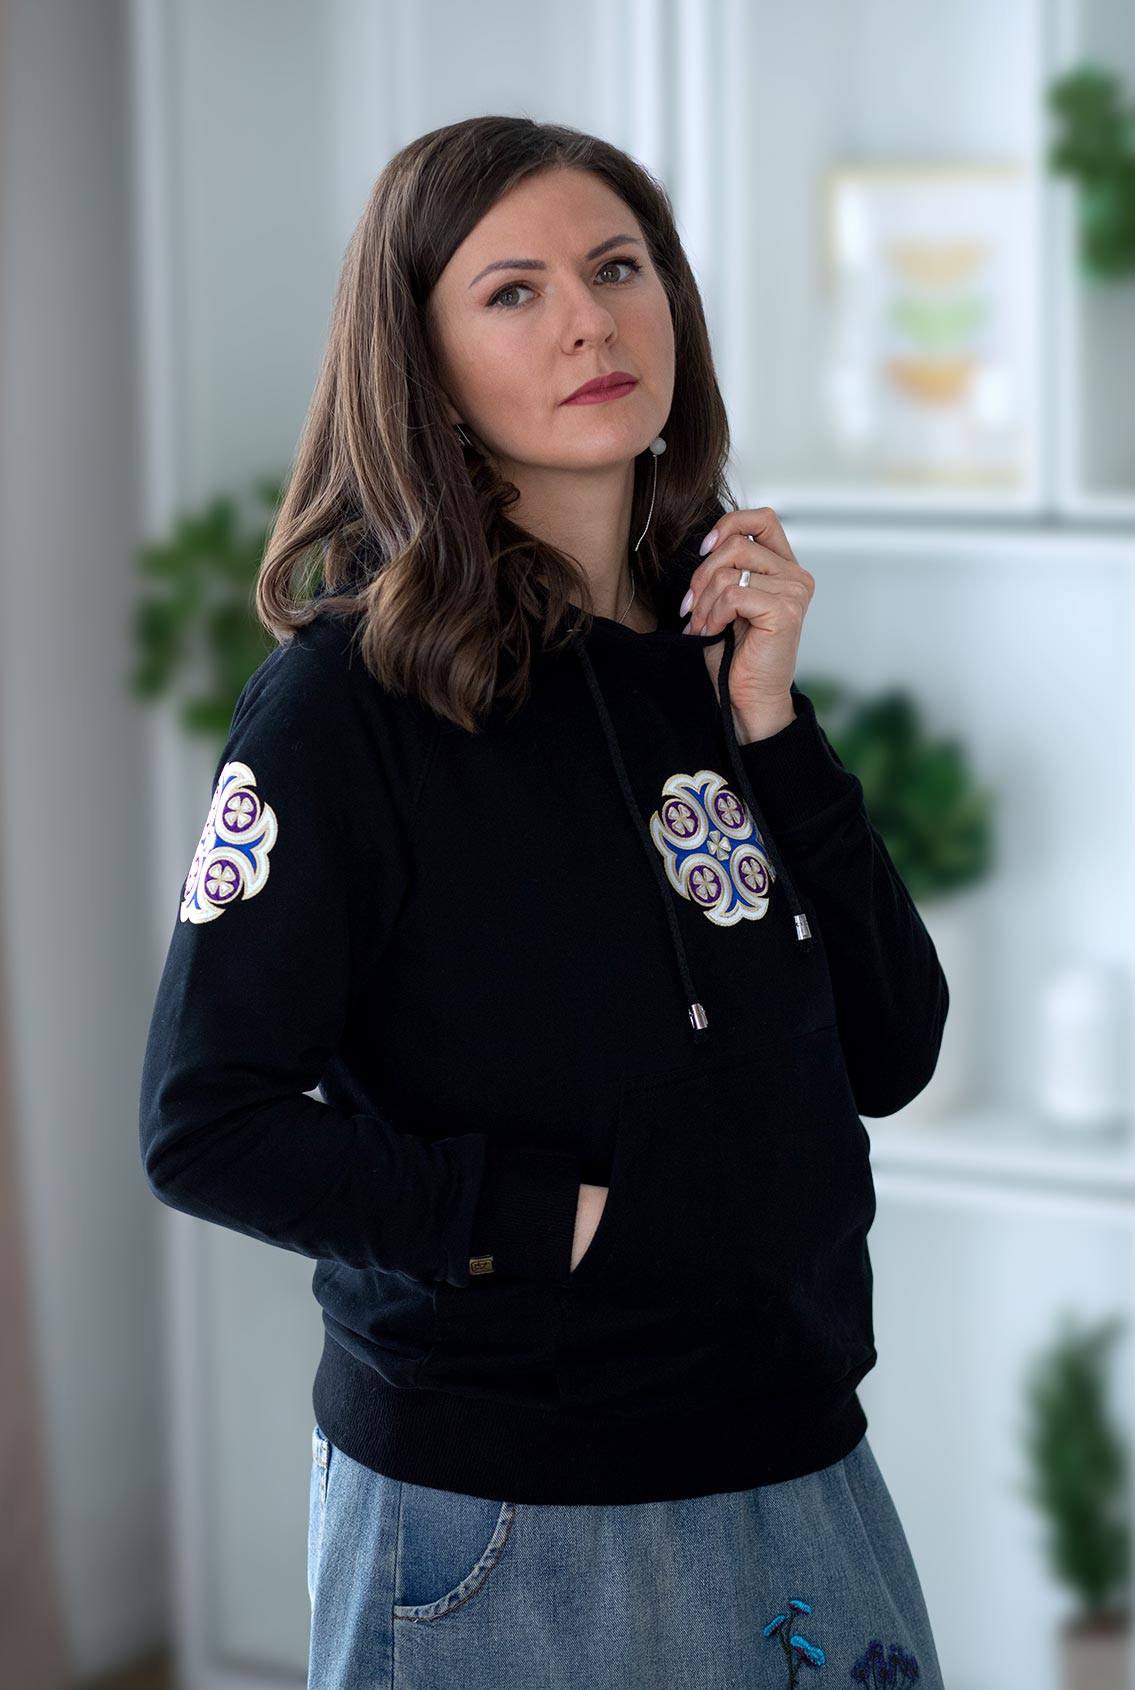 Sweatshirt for Orthodox women 